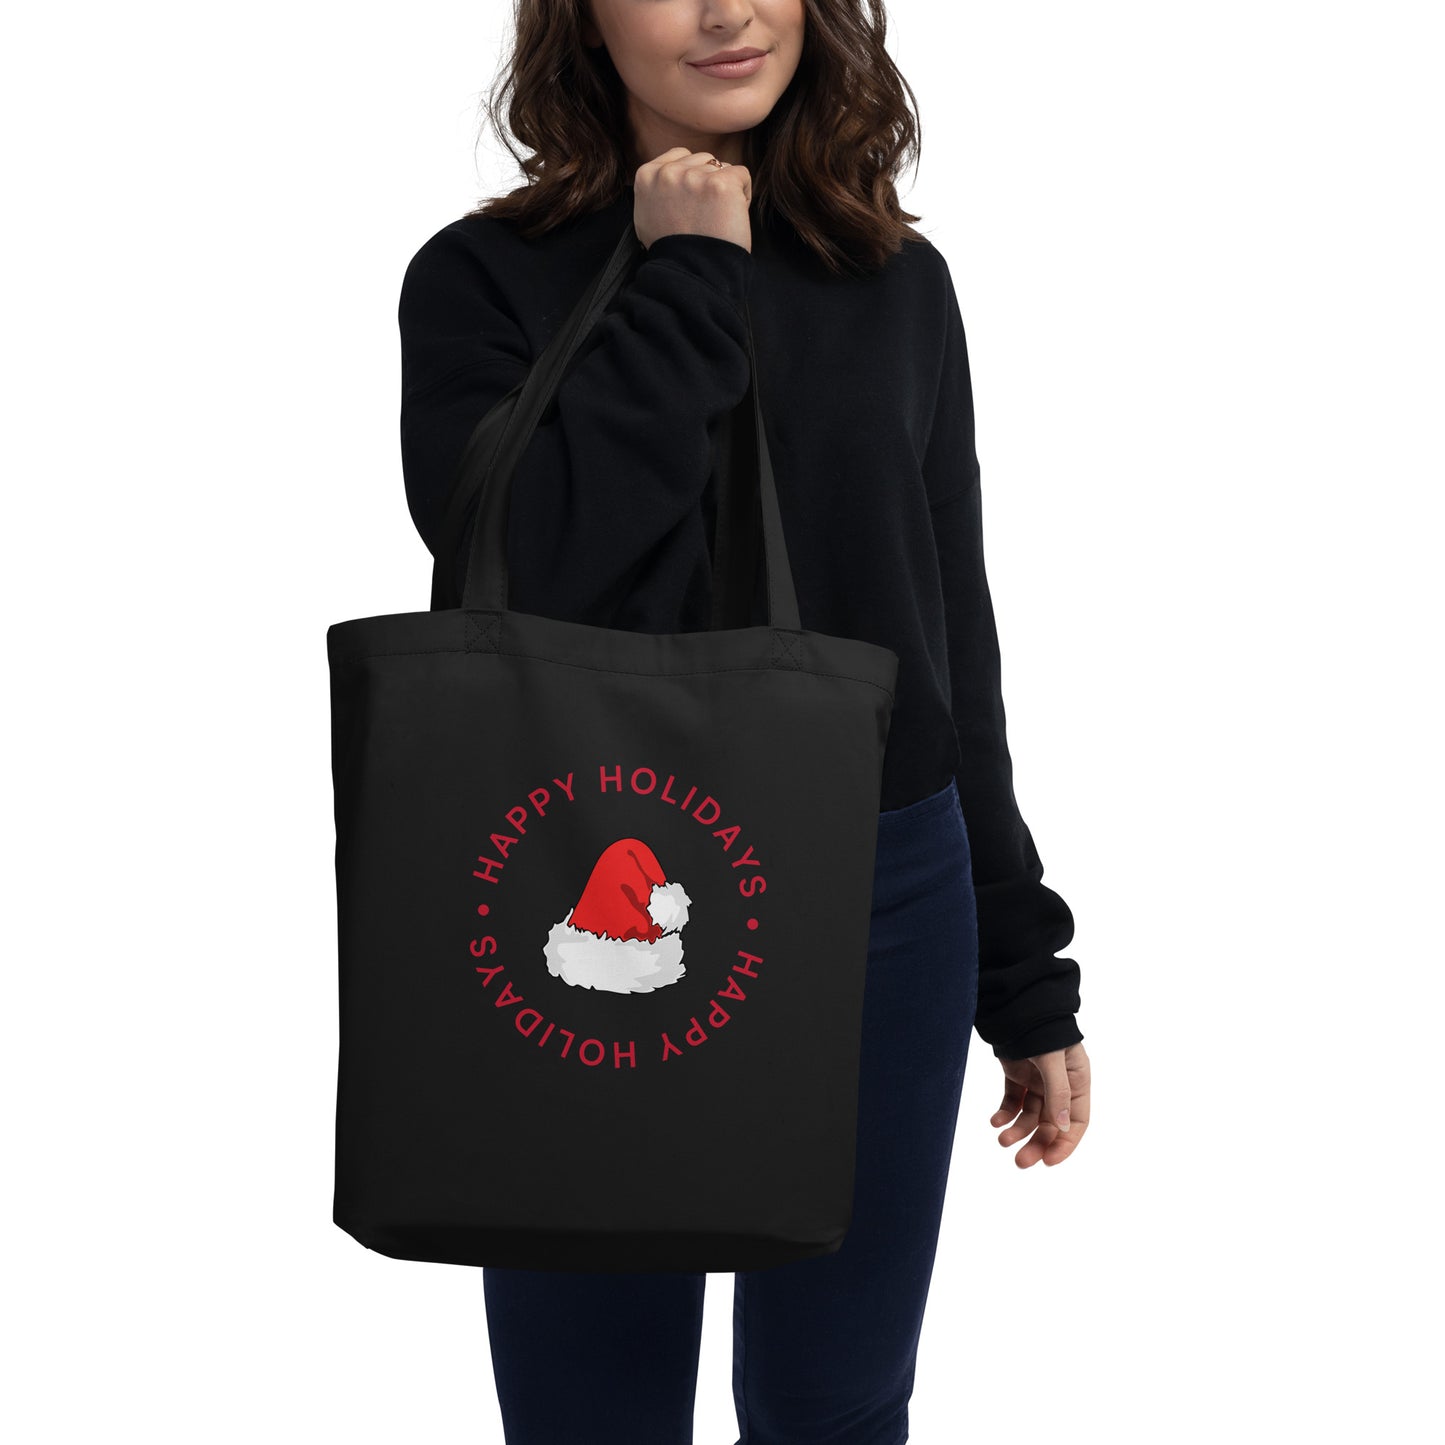 Happy Holidays Printed Eco Tote Bag